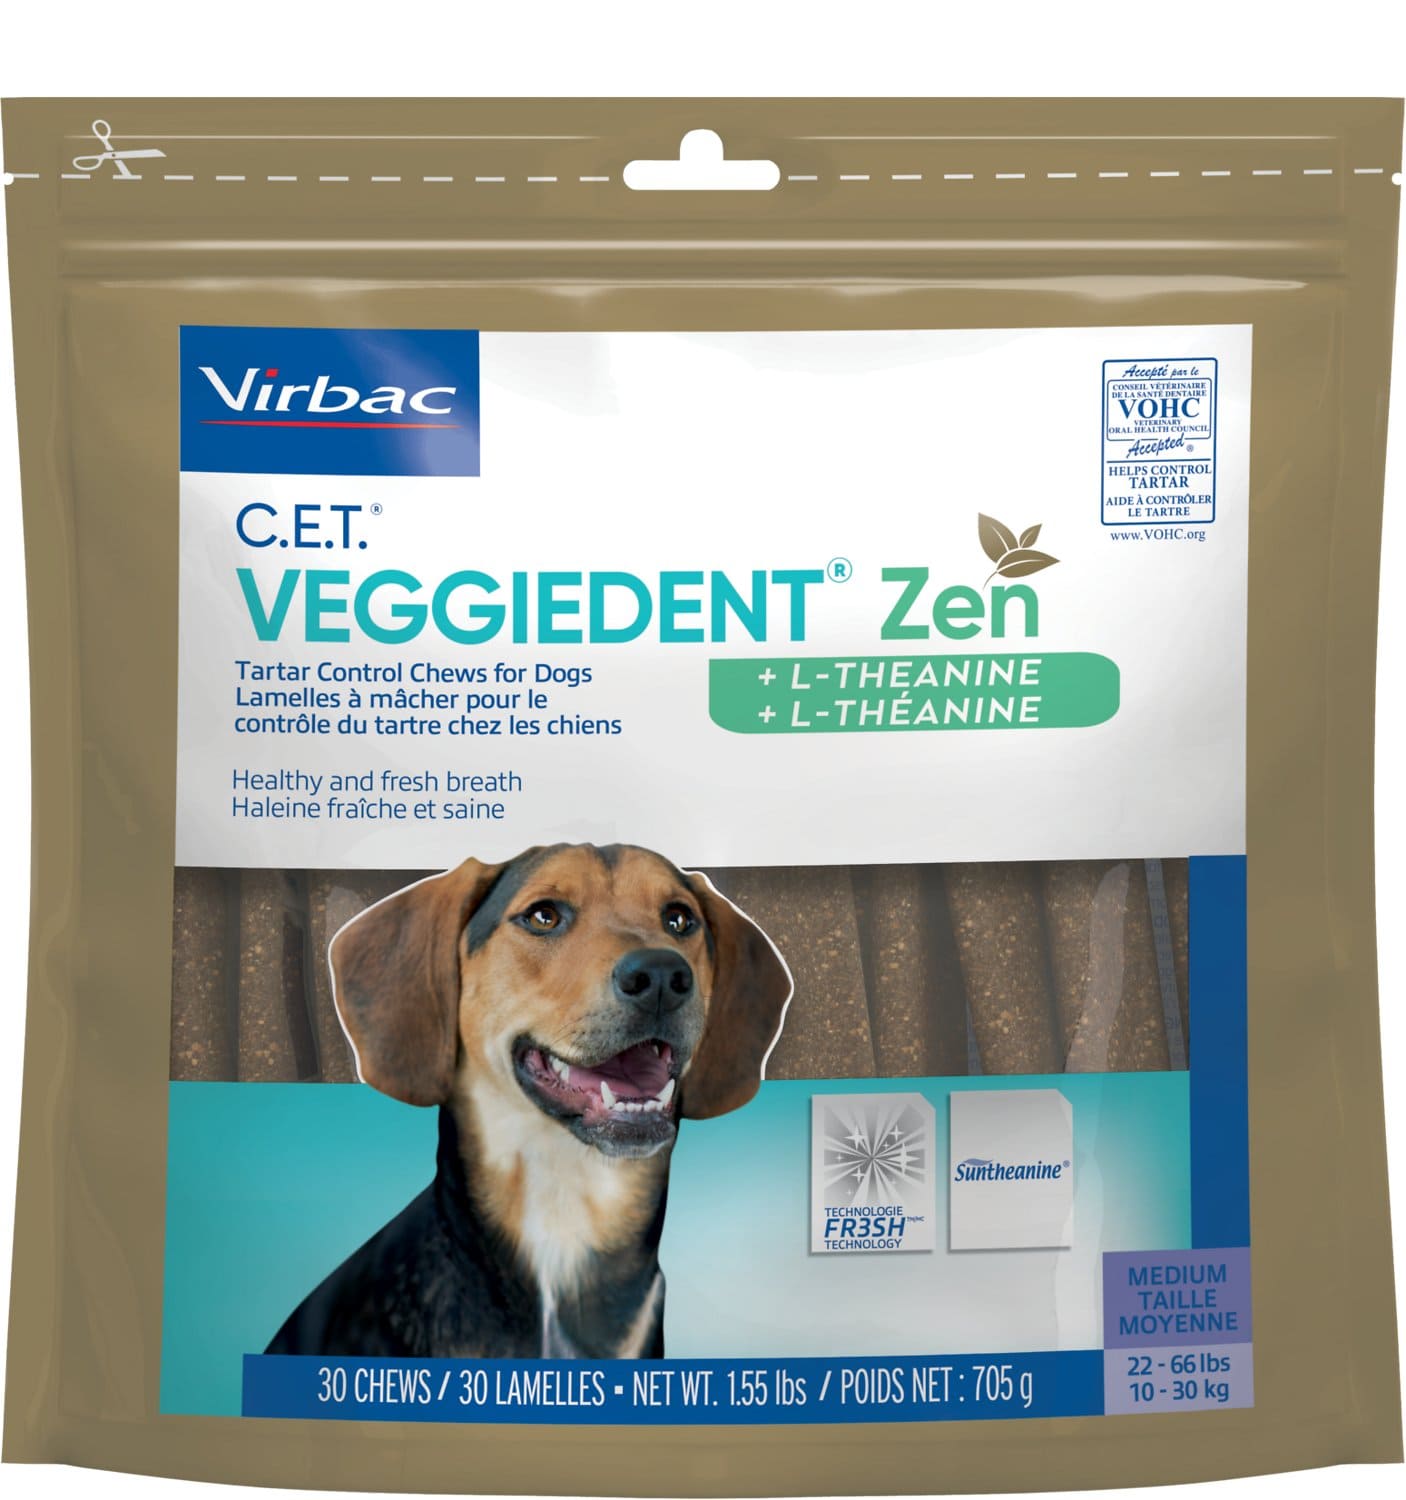 C.E.T. VeggieDent Zen + L-Theanine 30 chews for medium dogs 22-66 lbs 1